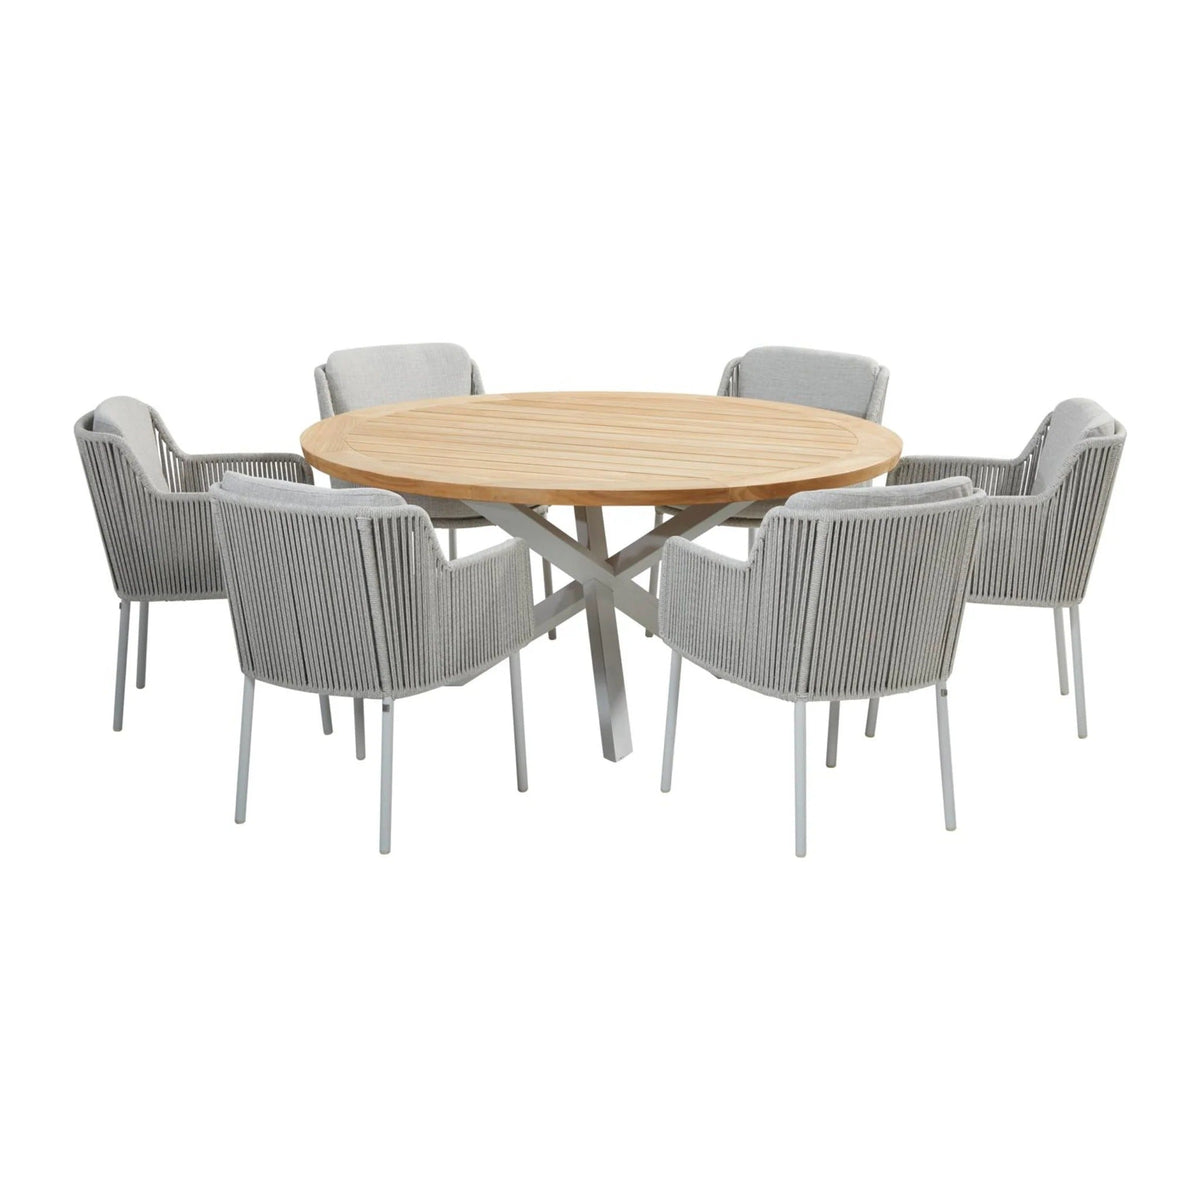 4 Seasons Bernini 6 Seat 160cm Prado Teak Table Dining Set - Vookoo Lifestyle